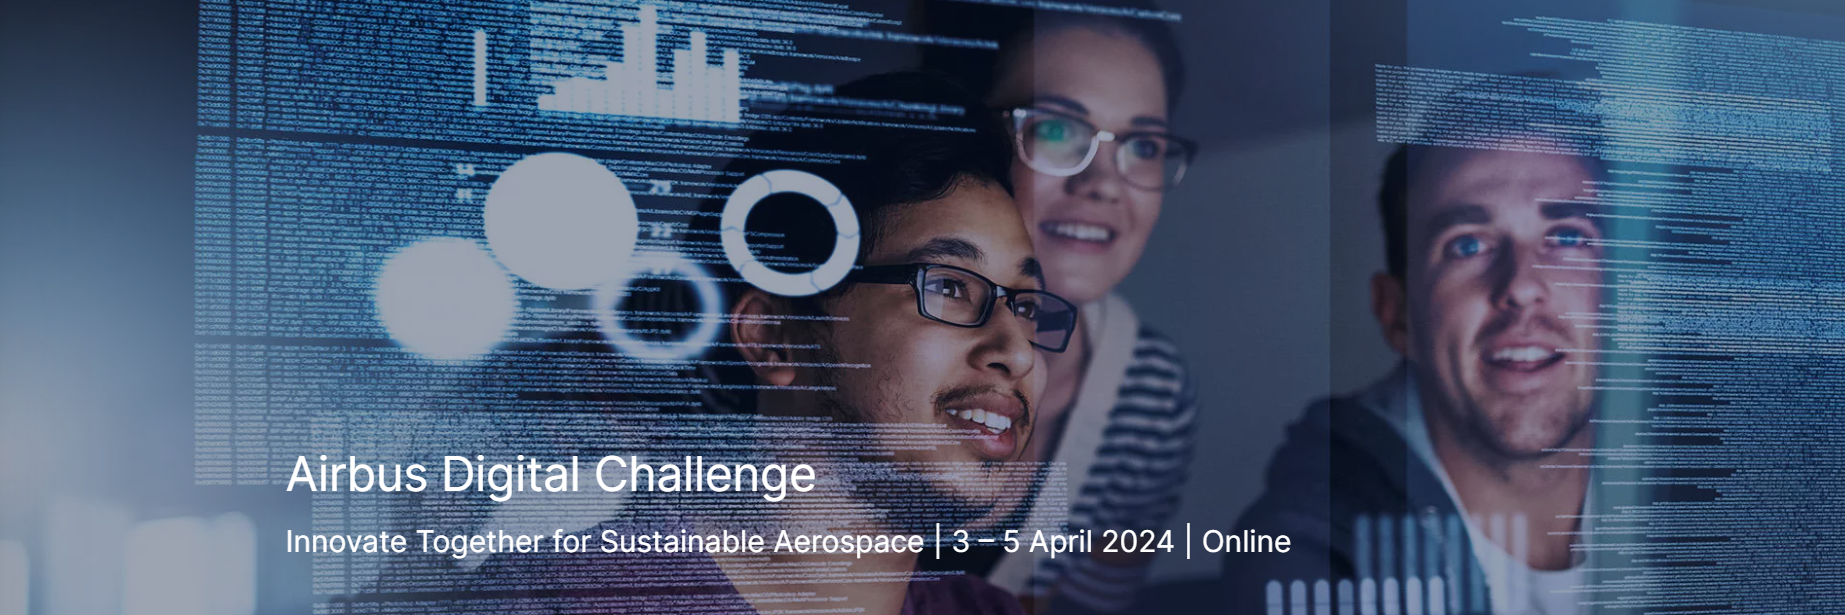 Airbus Digital Challenge 